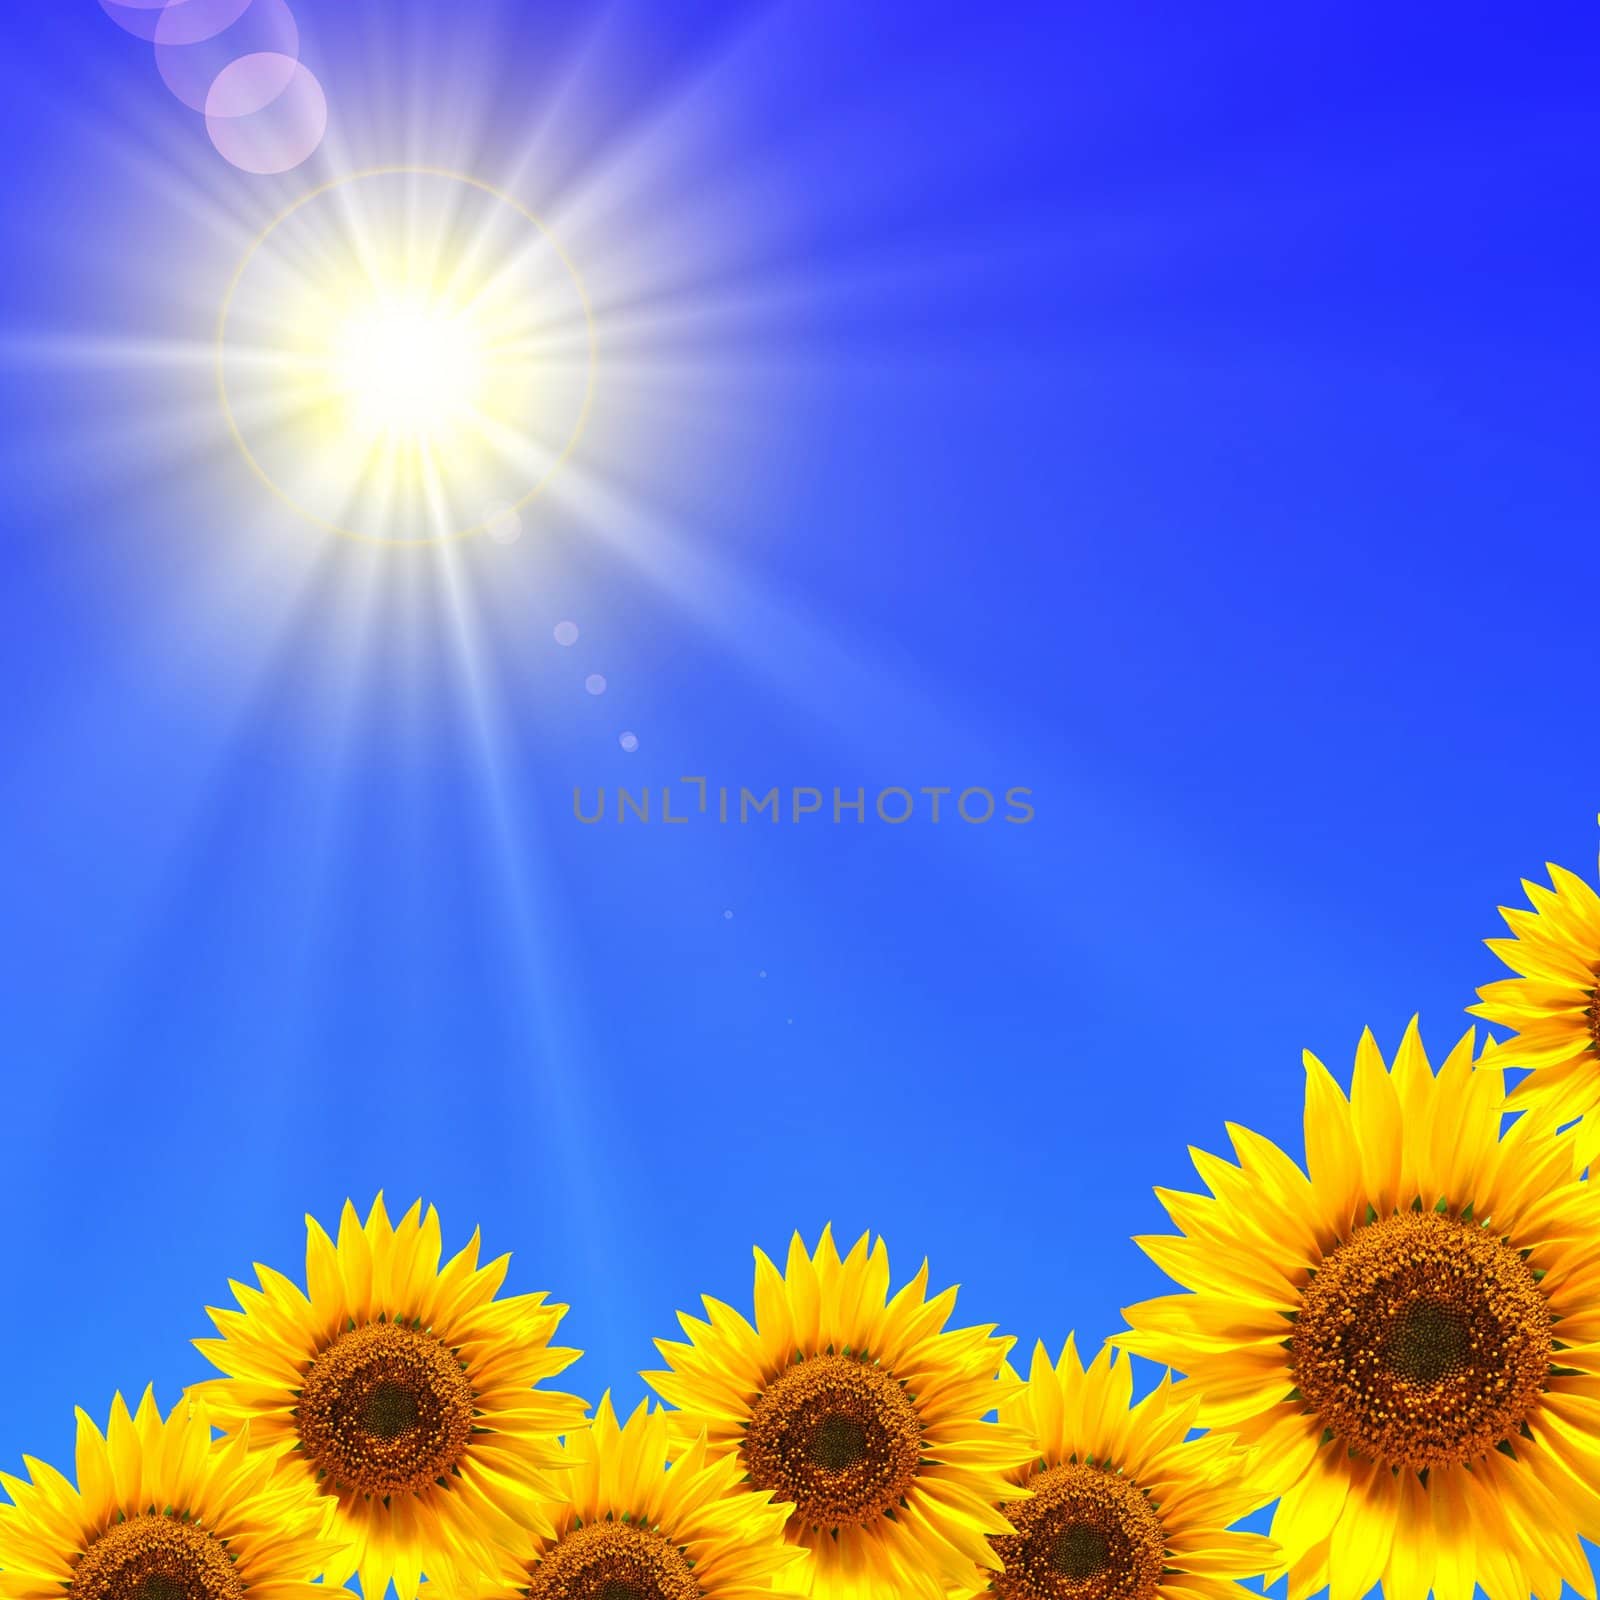 sunflower and blue sky by gunnar3000